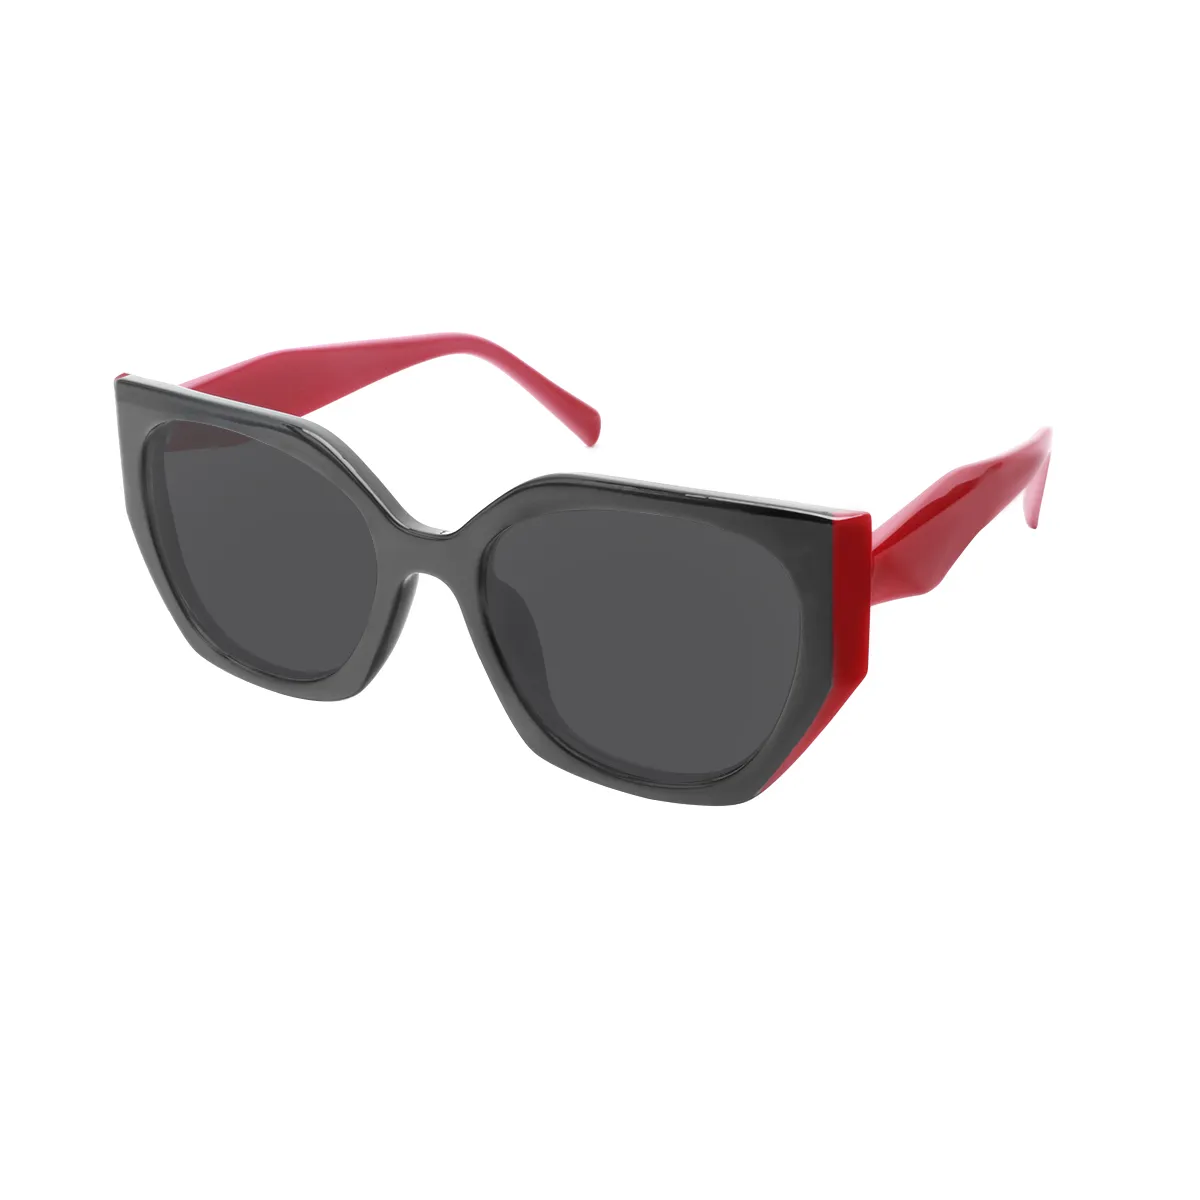 Prater - Geometric Wine Sunglasses for Women